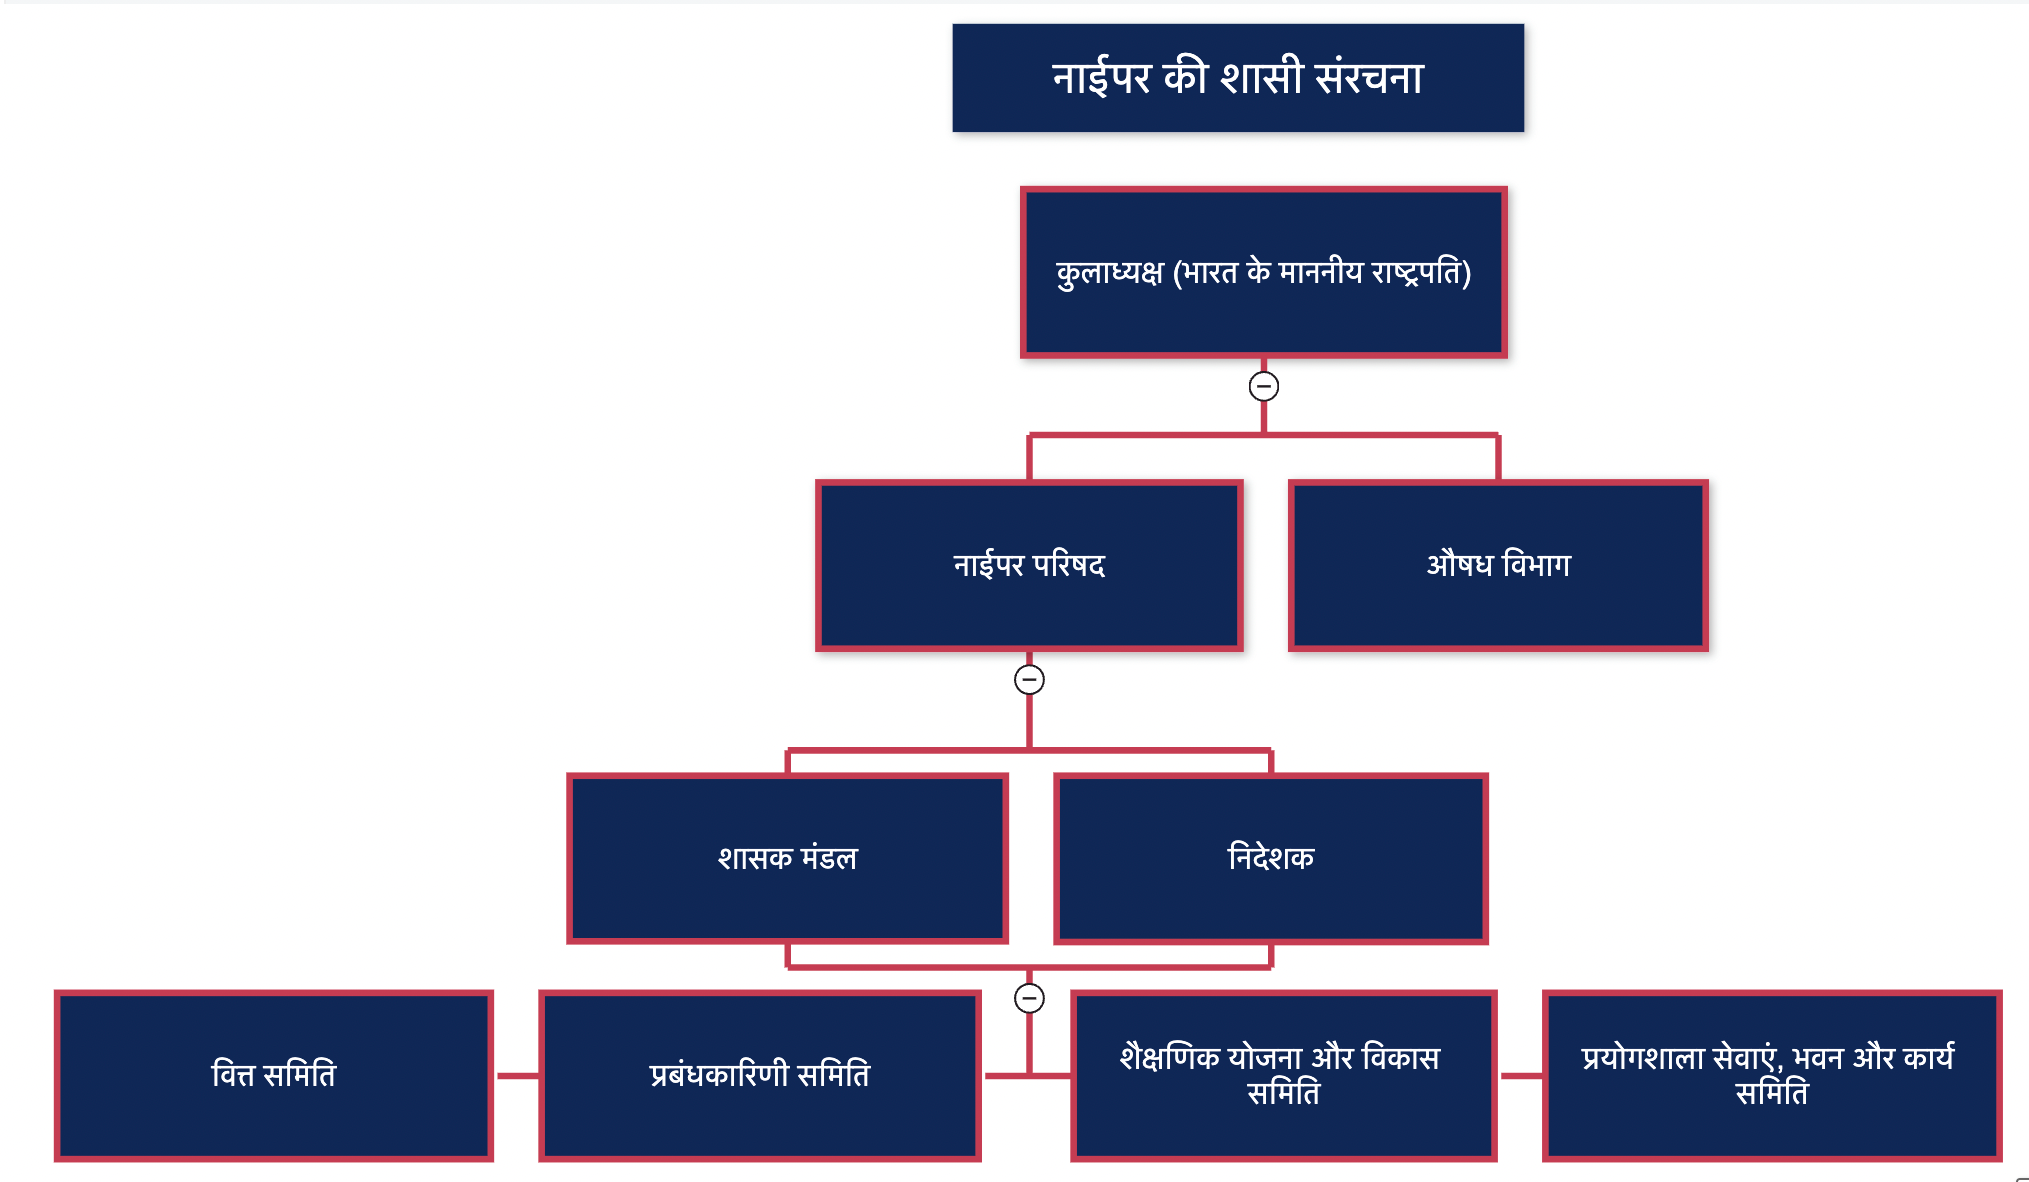 NIPER-Ahmedabad's Organizational Chart